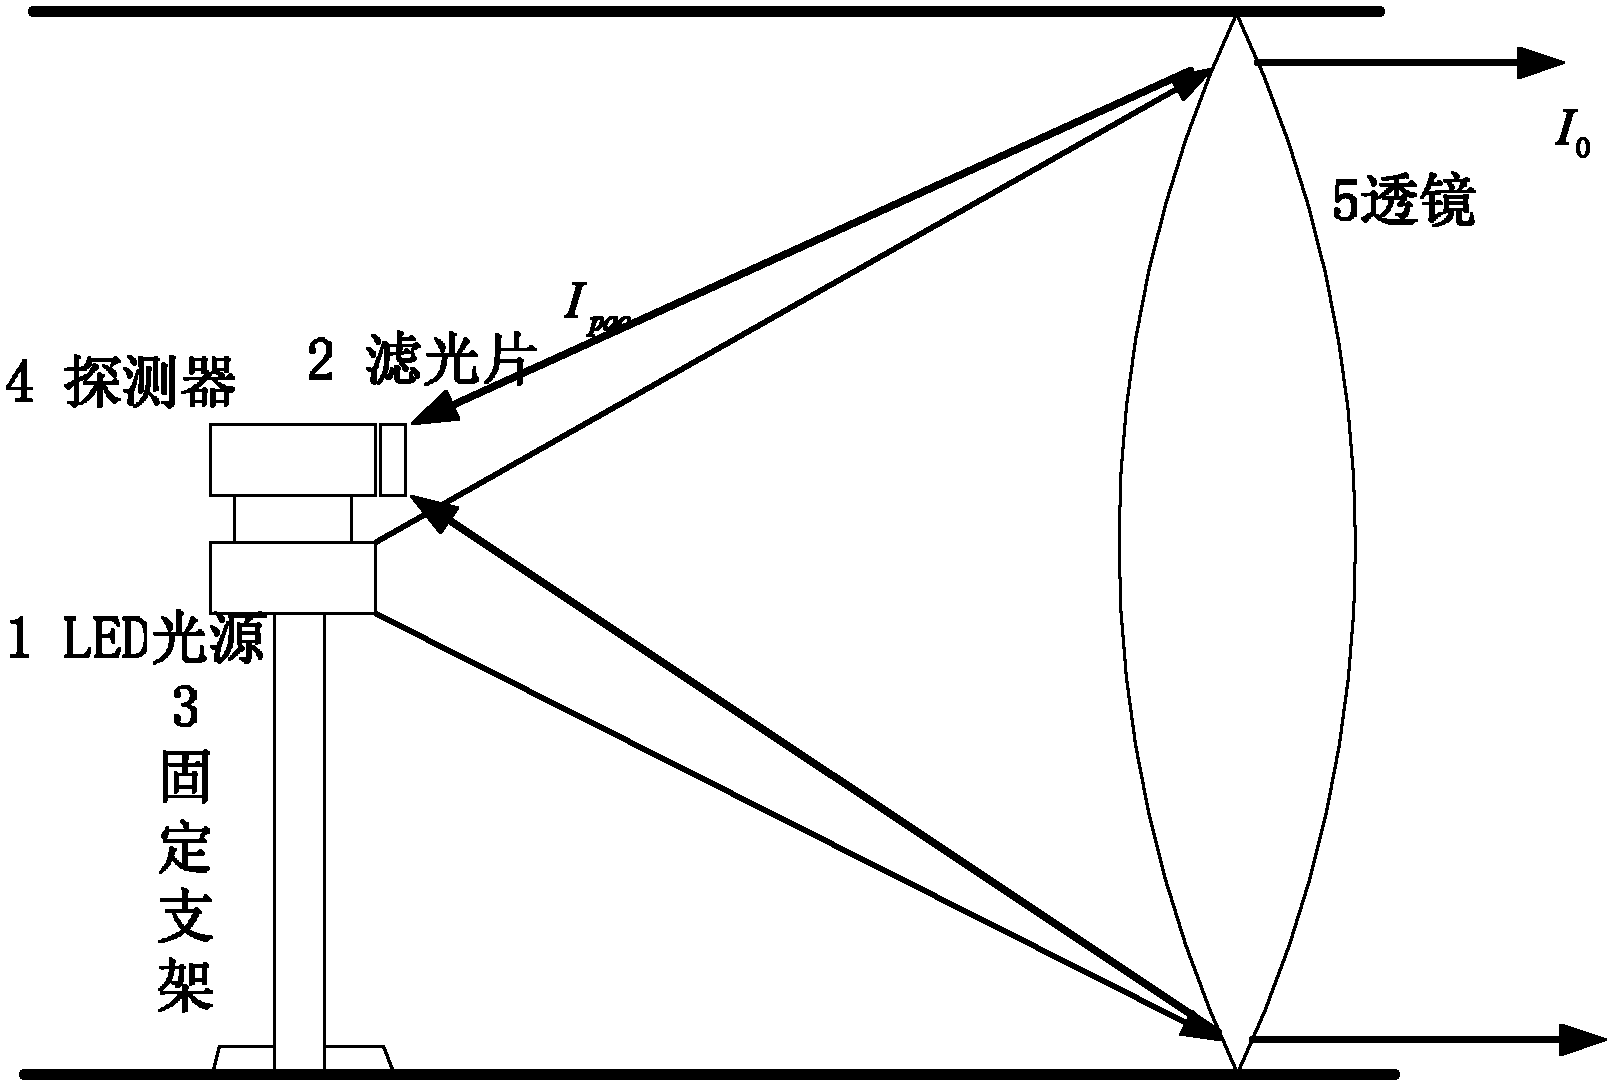 Method for measuring stain on optical lens